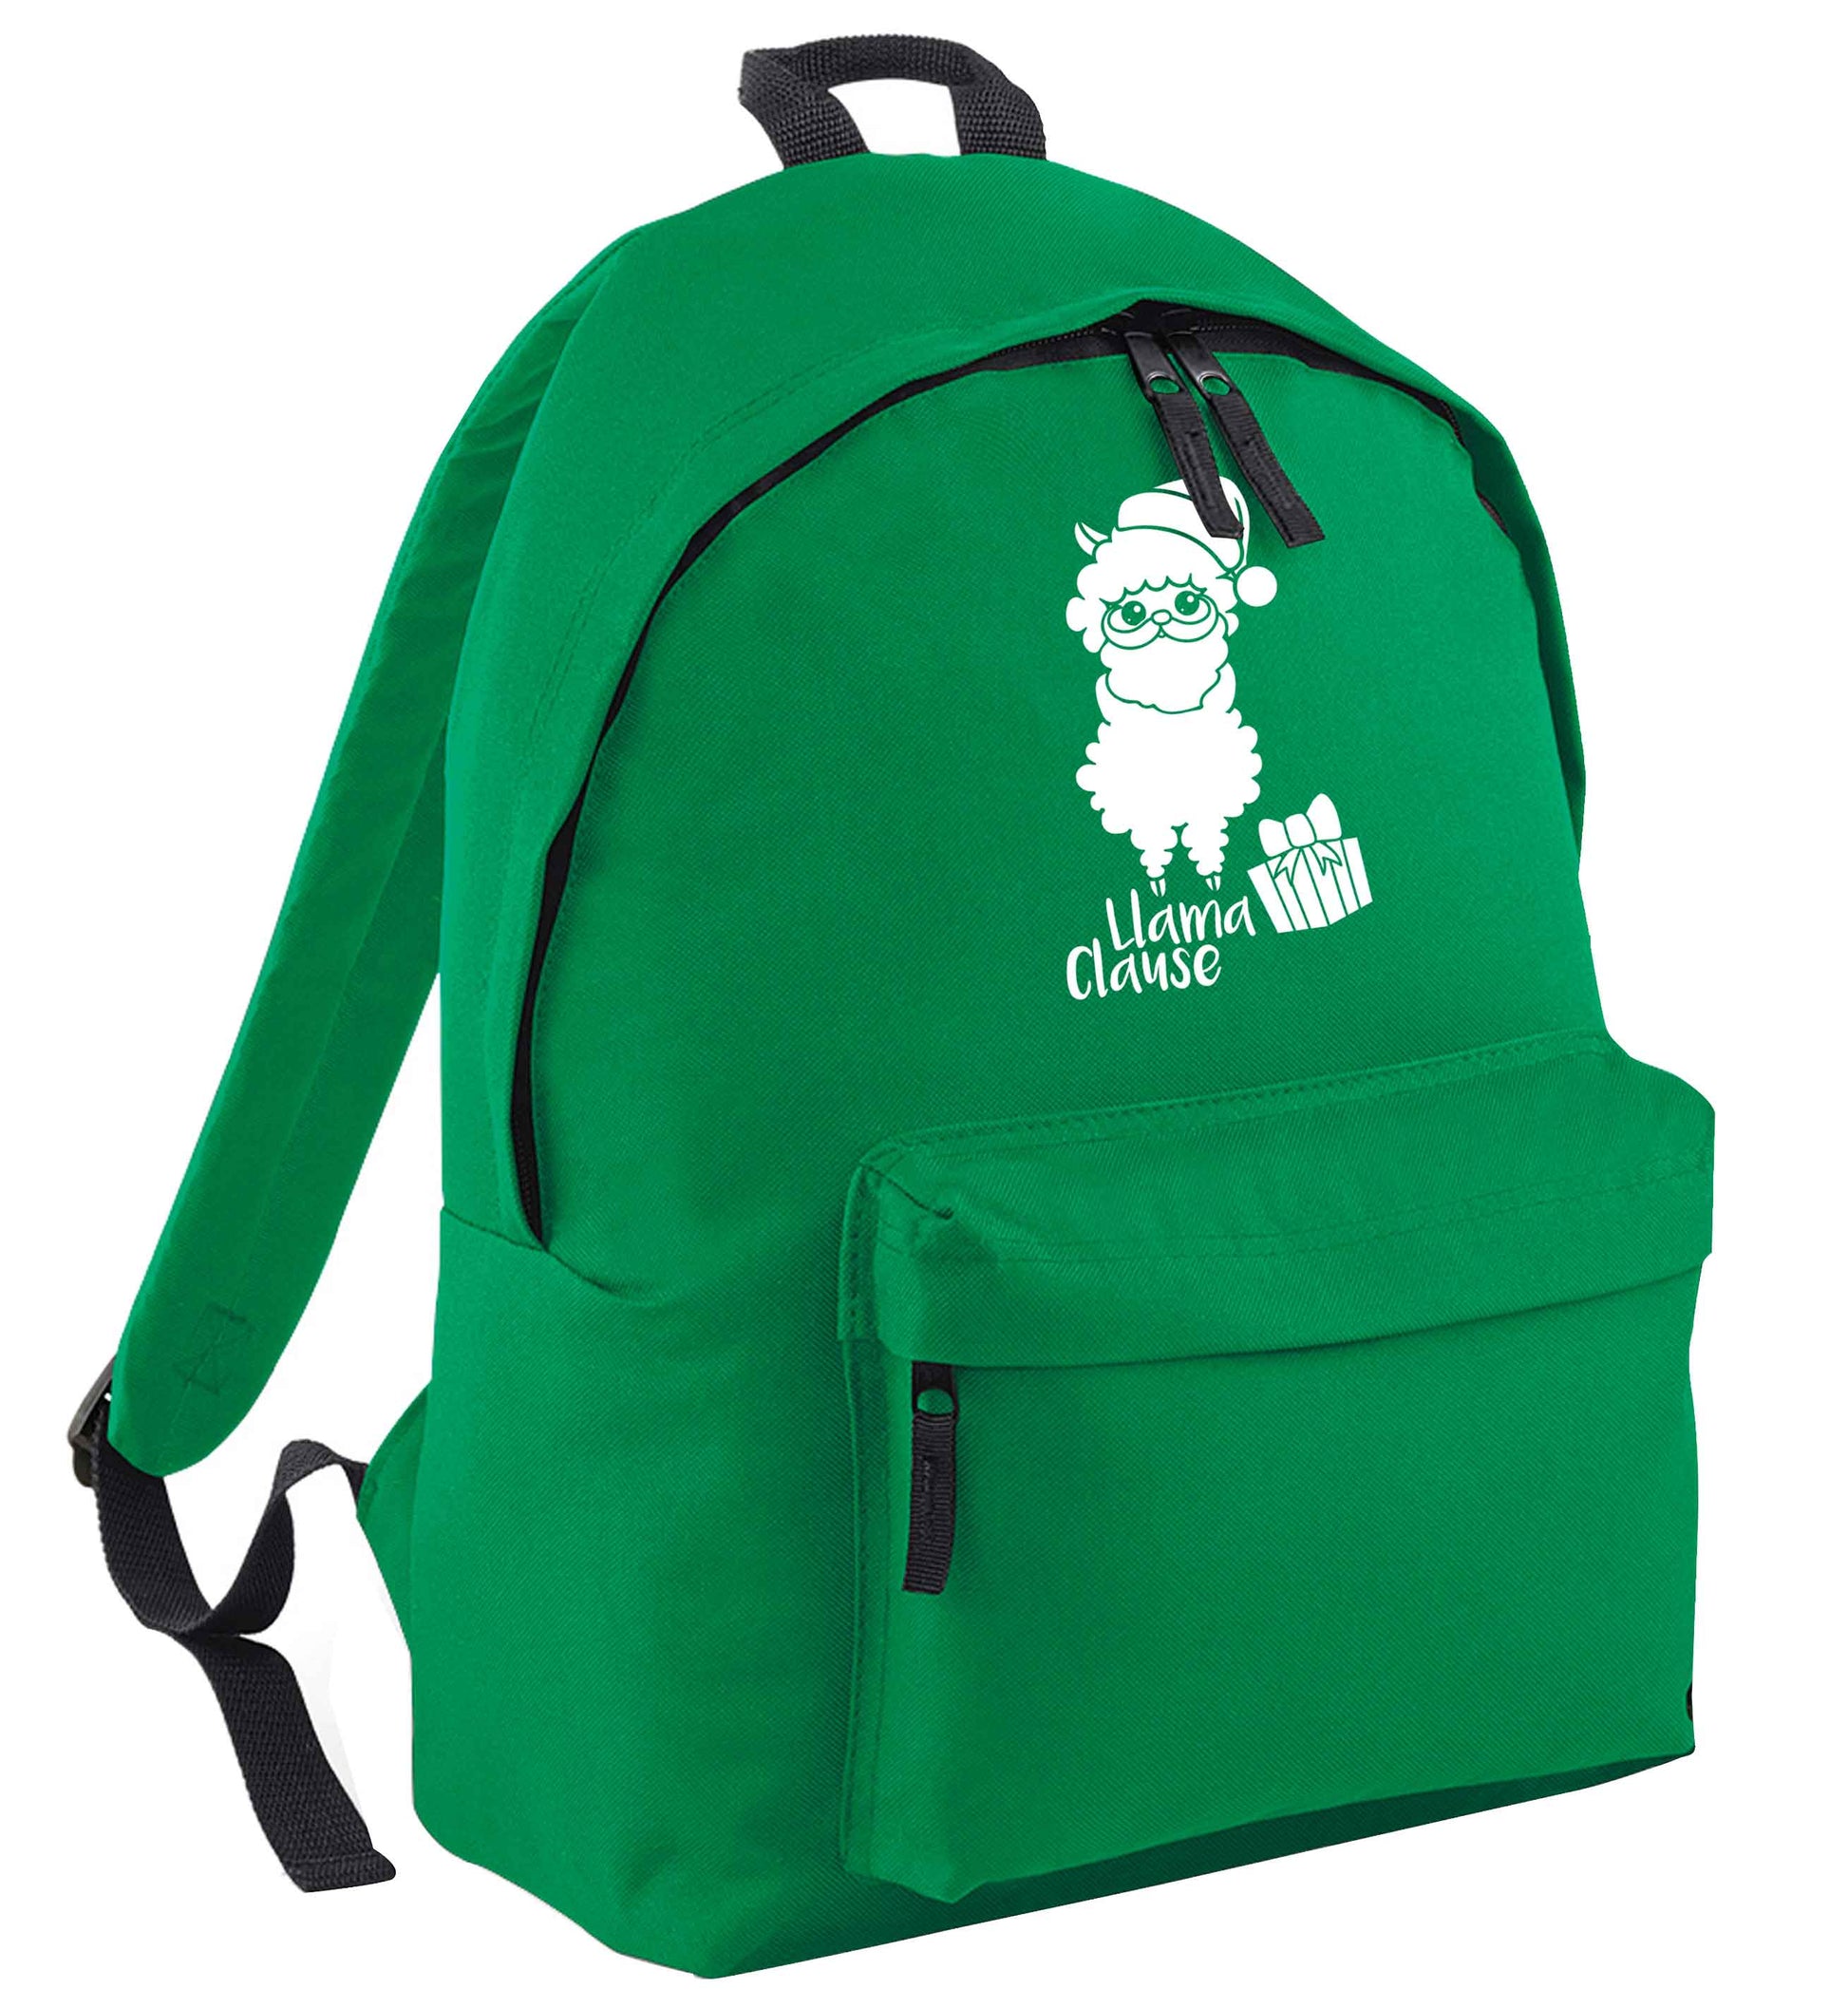 Llama Clause green adults backpack